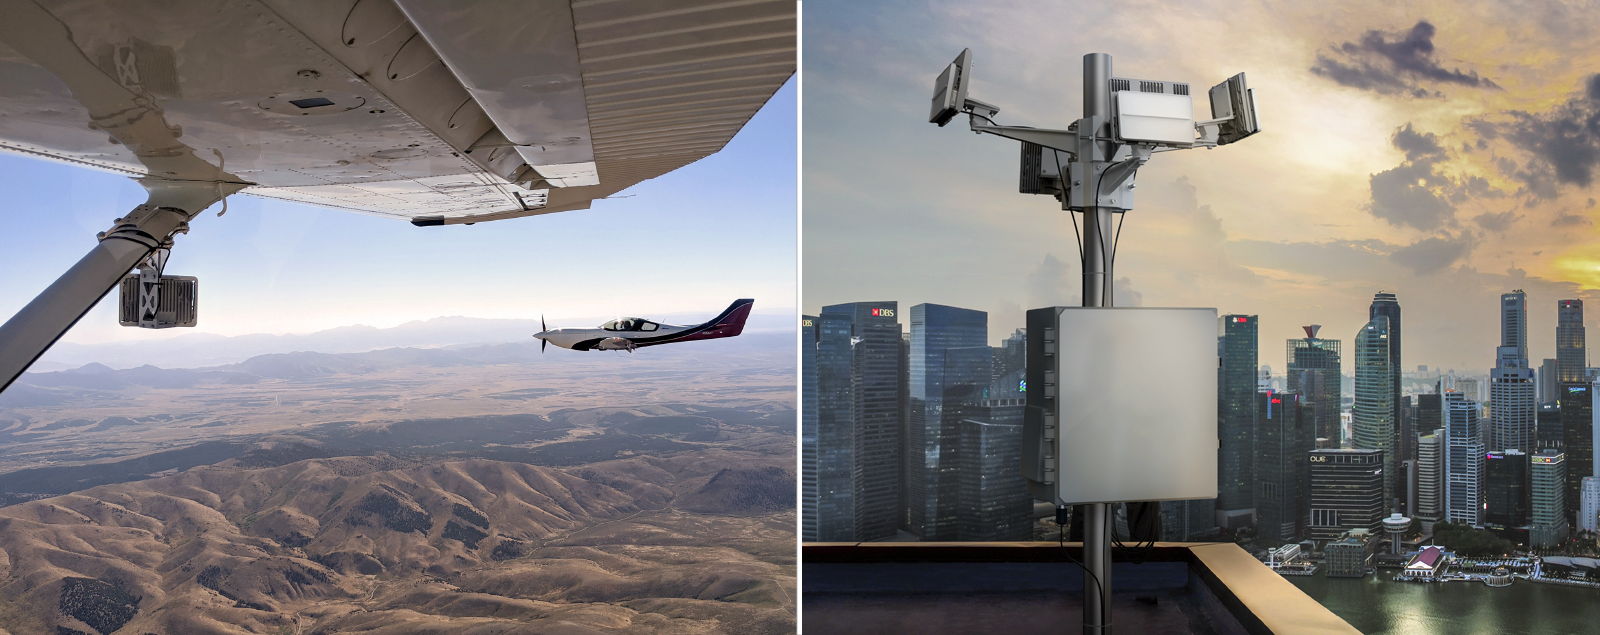 Radar applications for Advanced Air Mobility